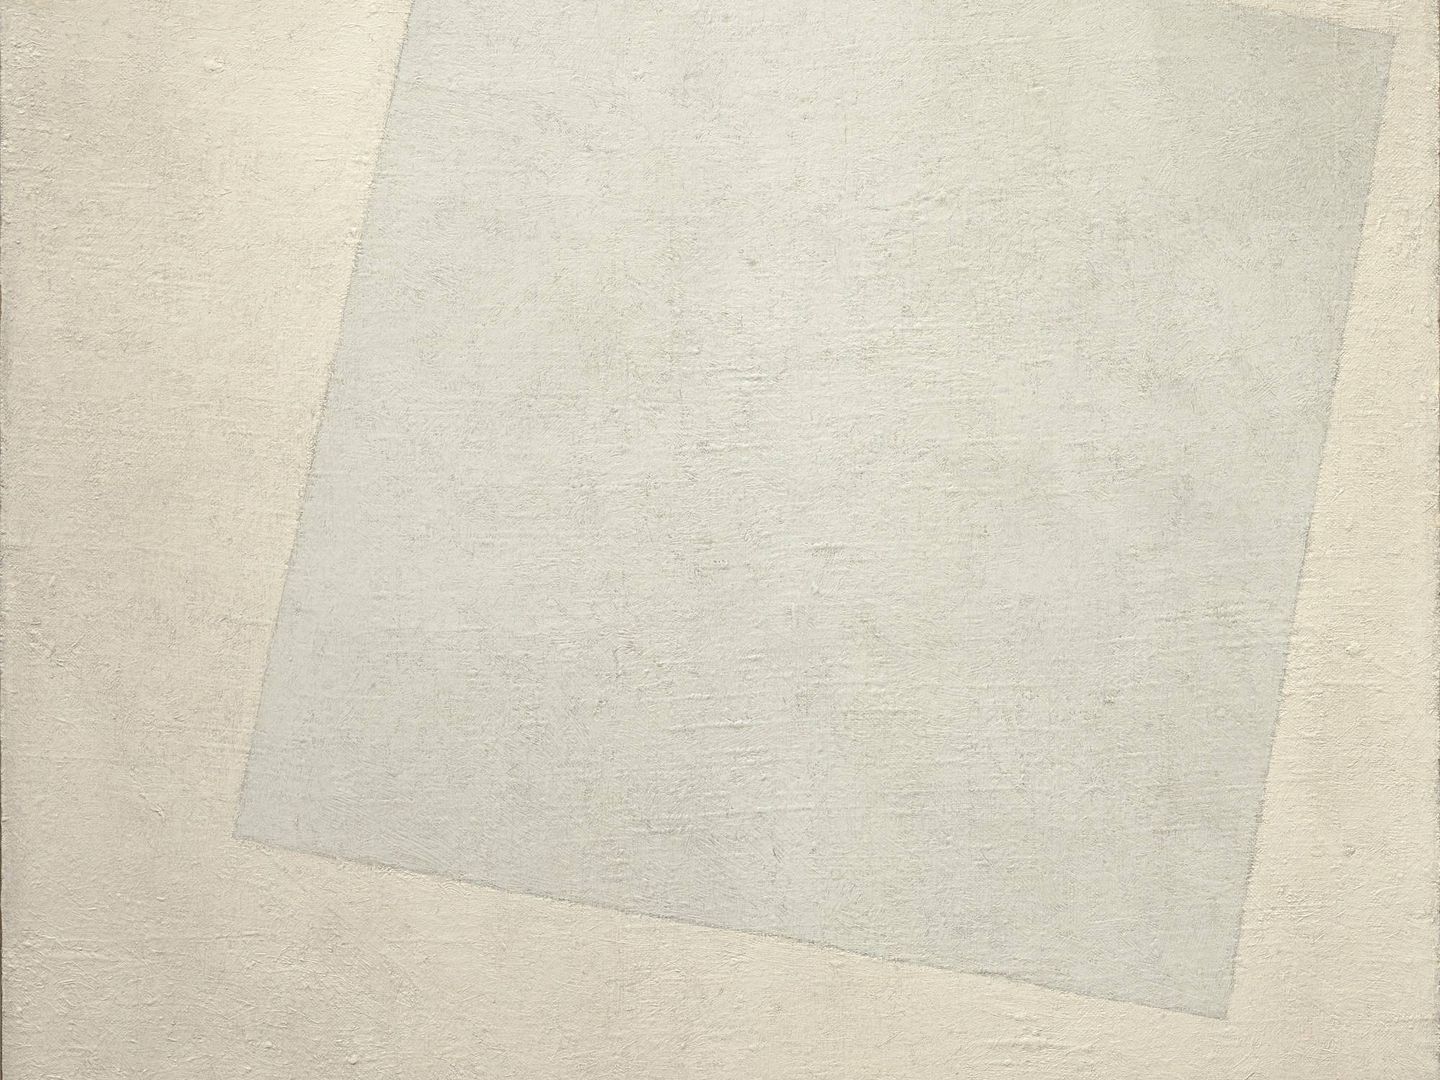 Malevich, 'Cuadrado blanco sobre fondo blanco' (1918).